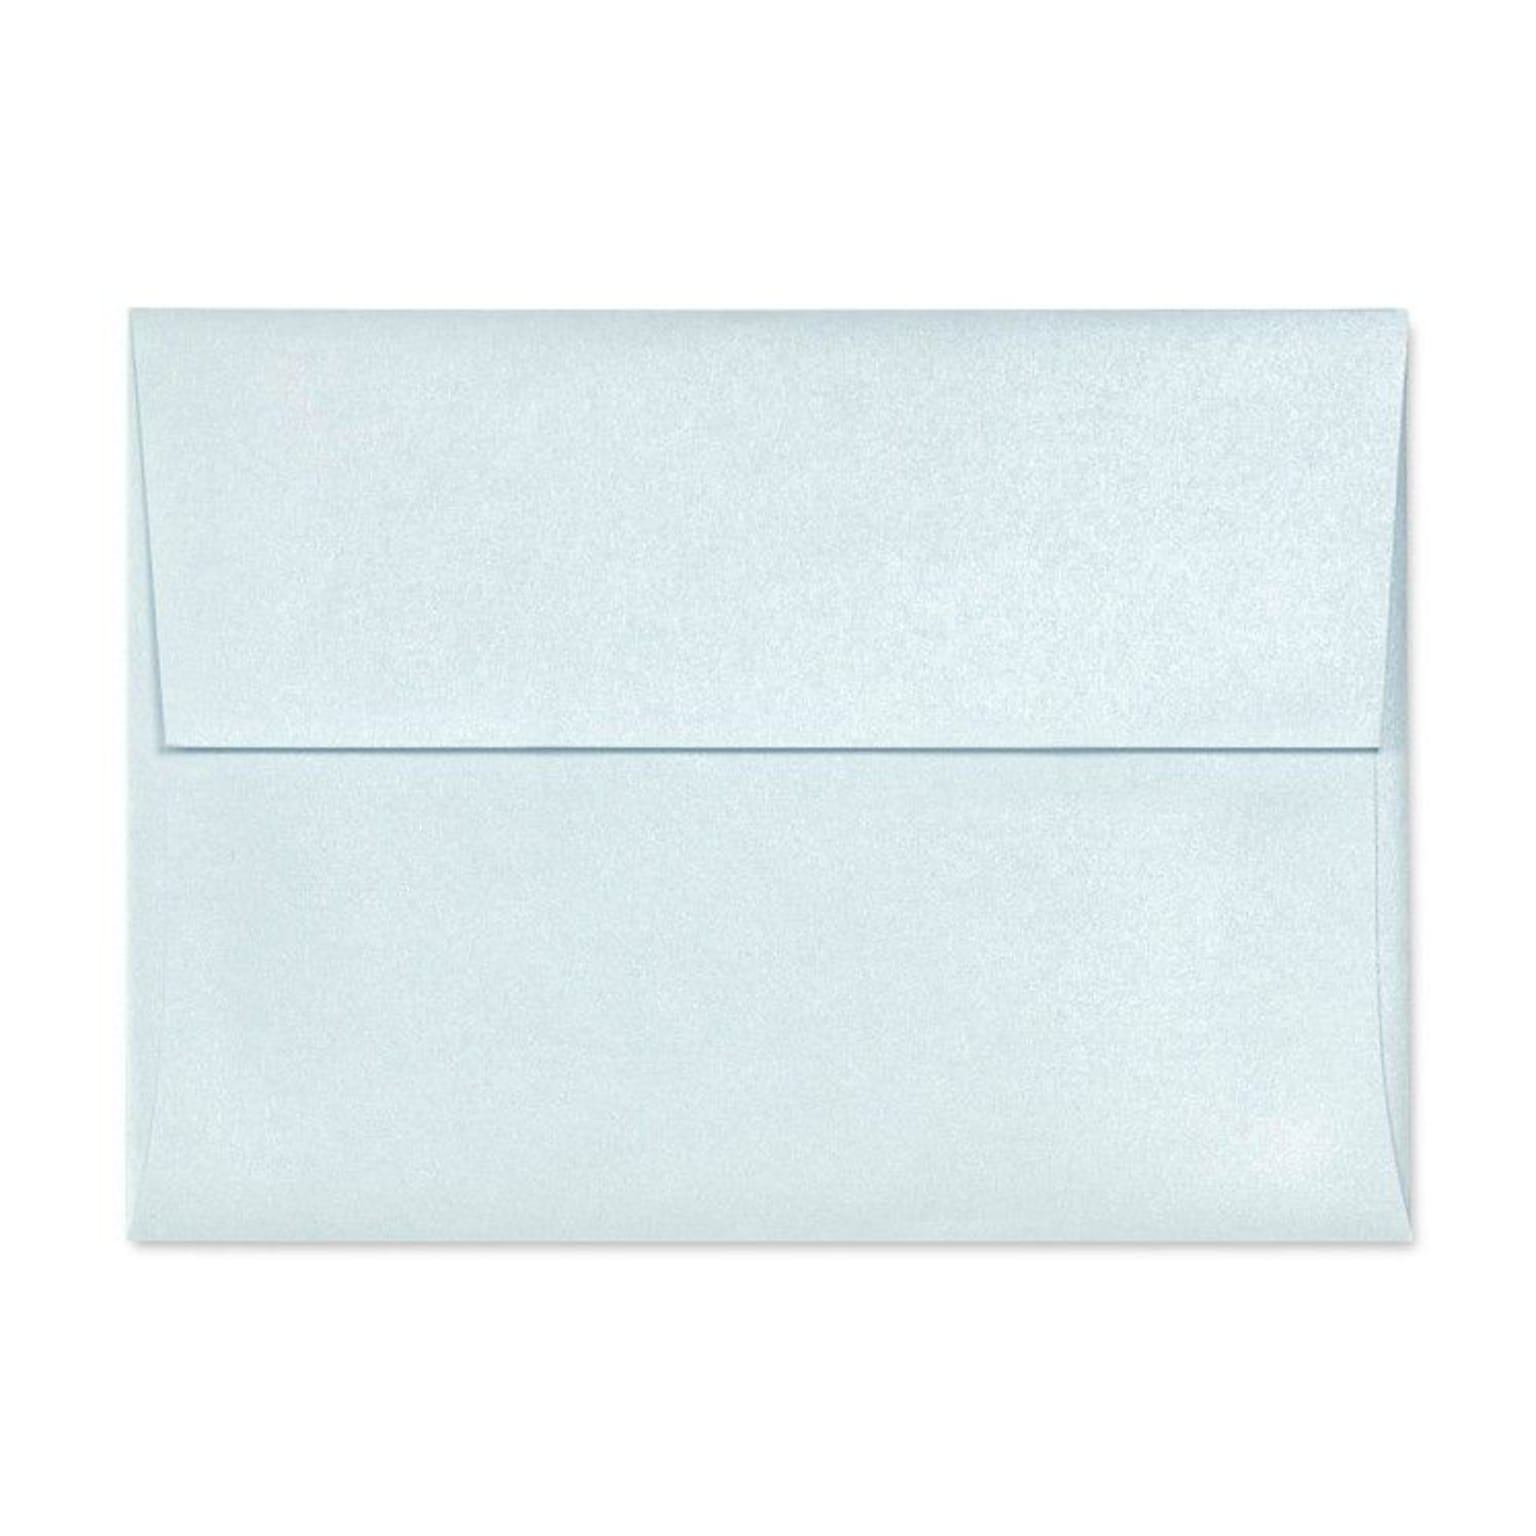 LUX 4 3/8 x 5 3/4 80lbs. A2 Invitation Envelopes W/Glue, Aquamarine Metallic, 50/Pack